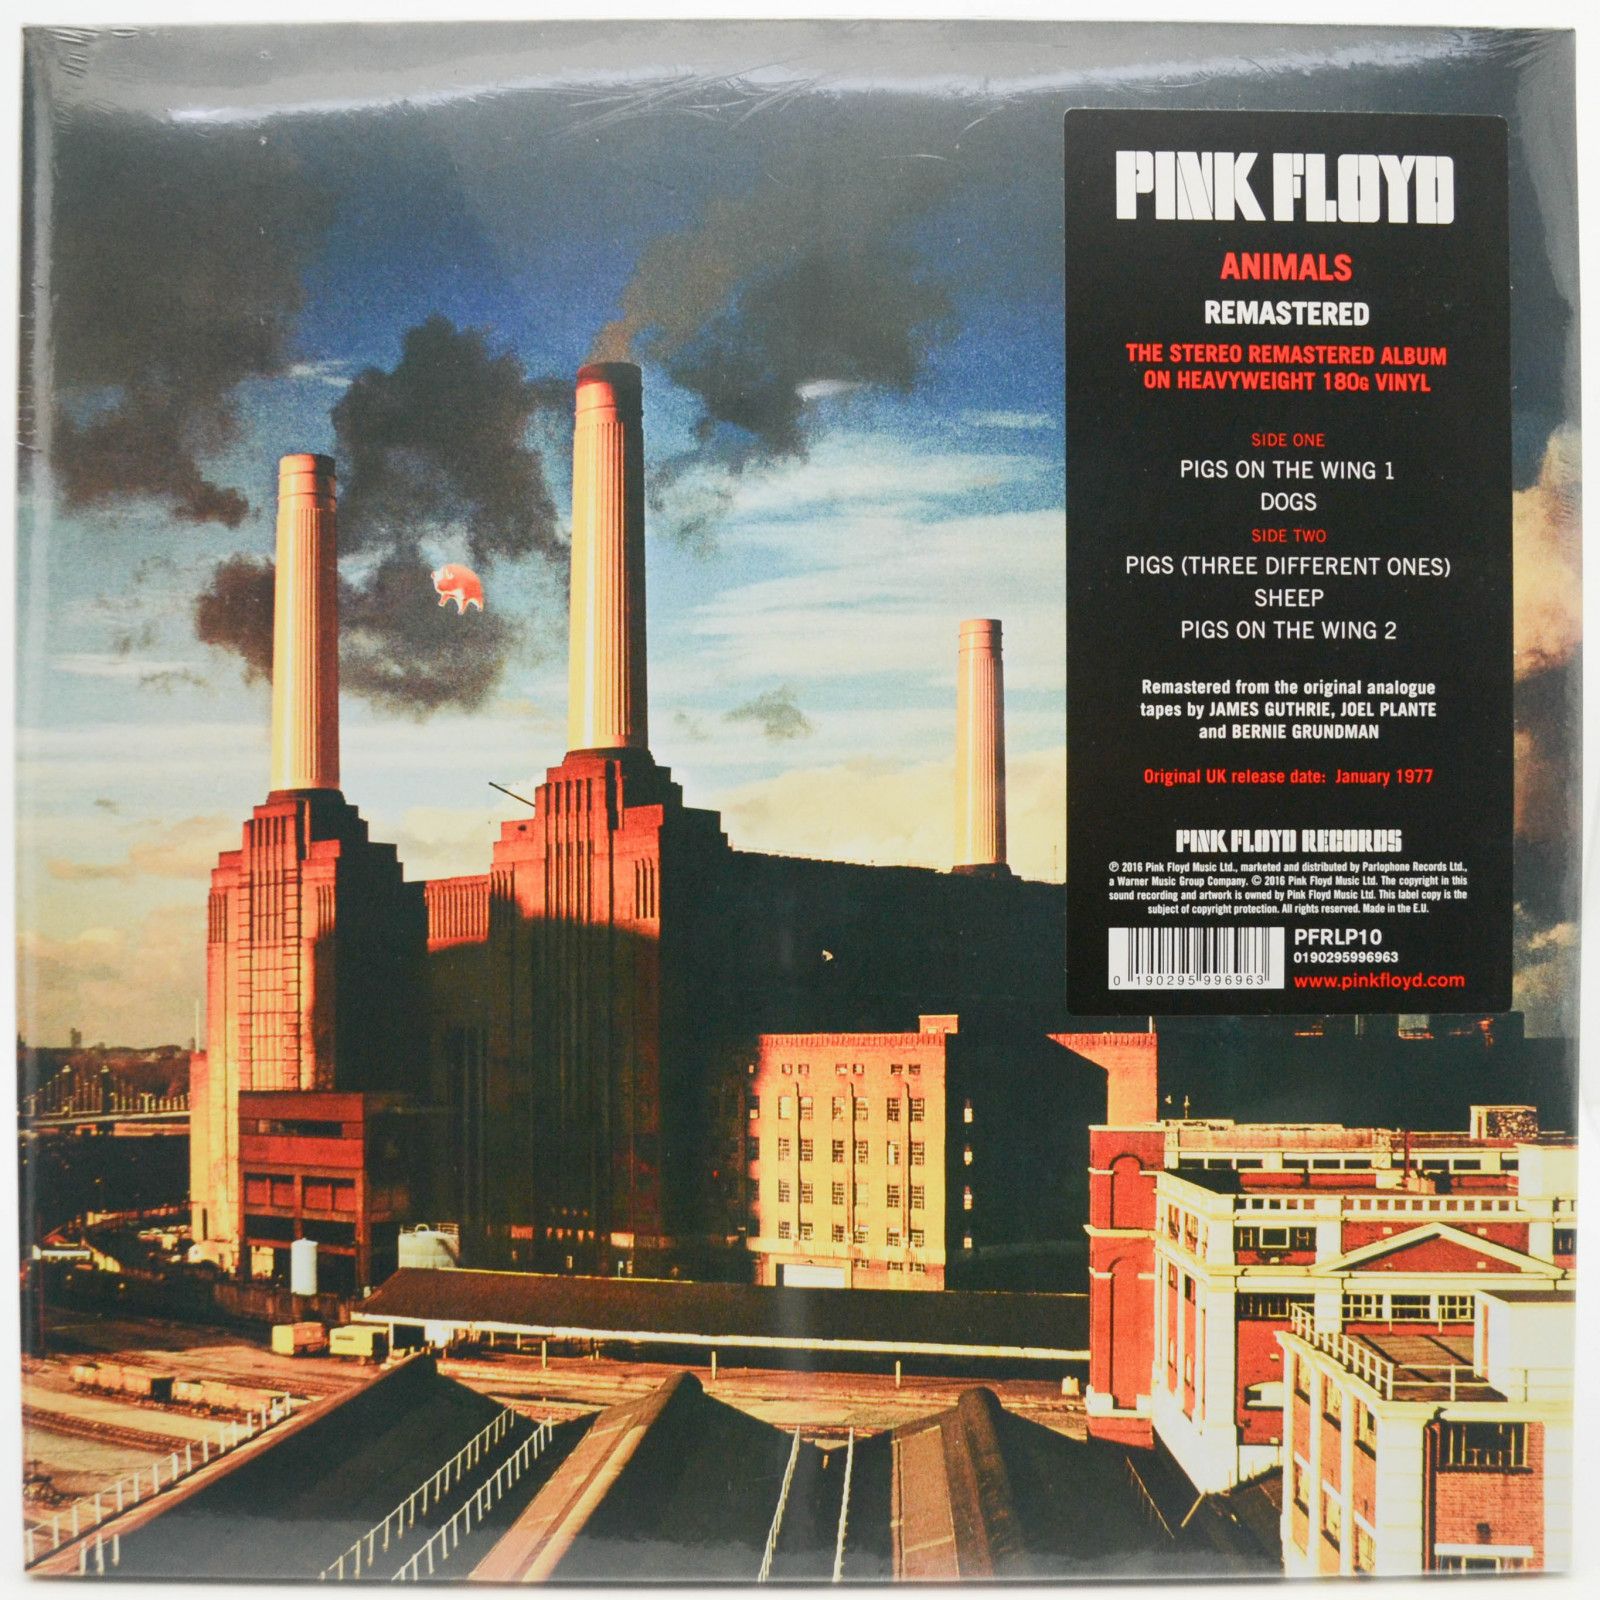 Pink Floyd — Animals, 1976